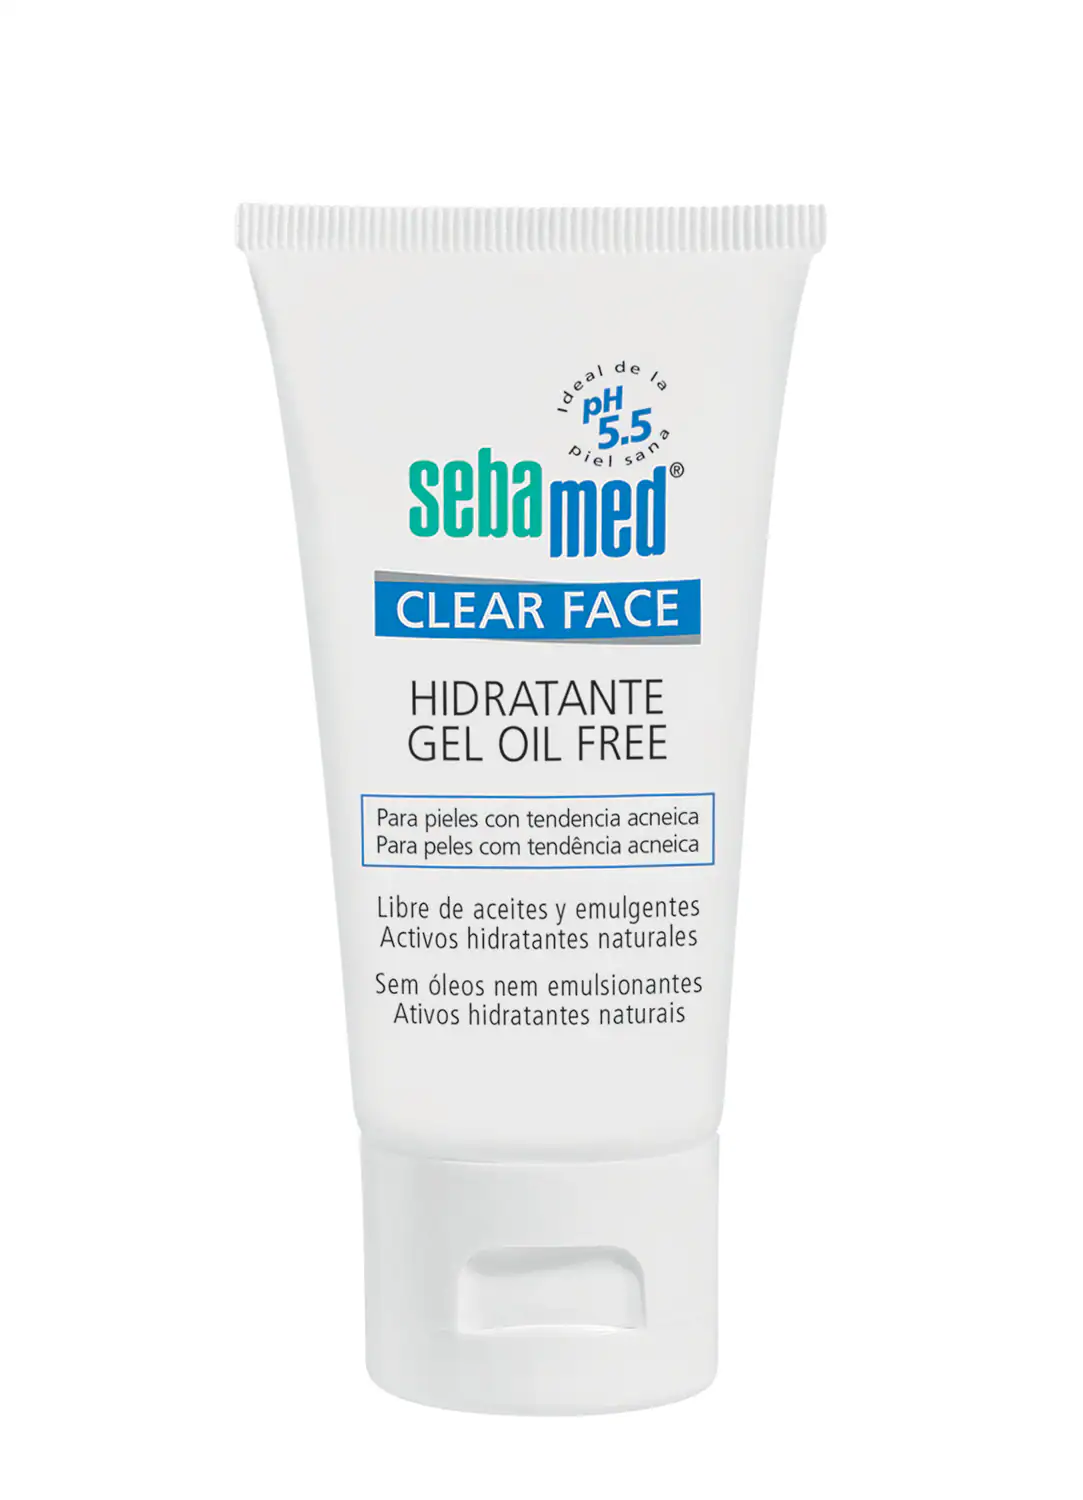 Sebamed Clear Face Hidratante Gel Oil Free de Laboratorios Leti